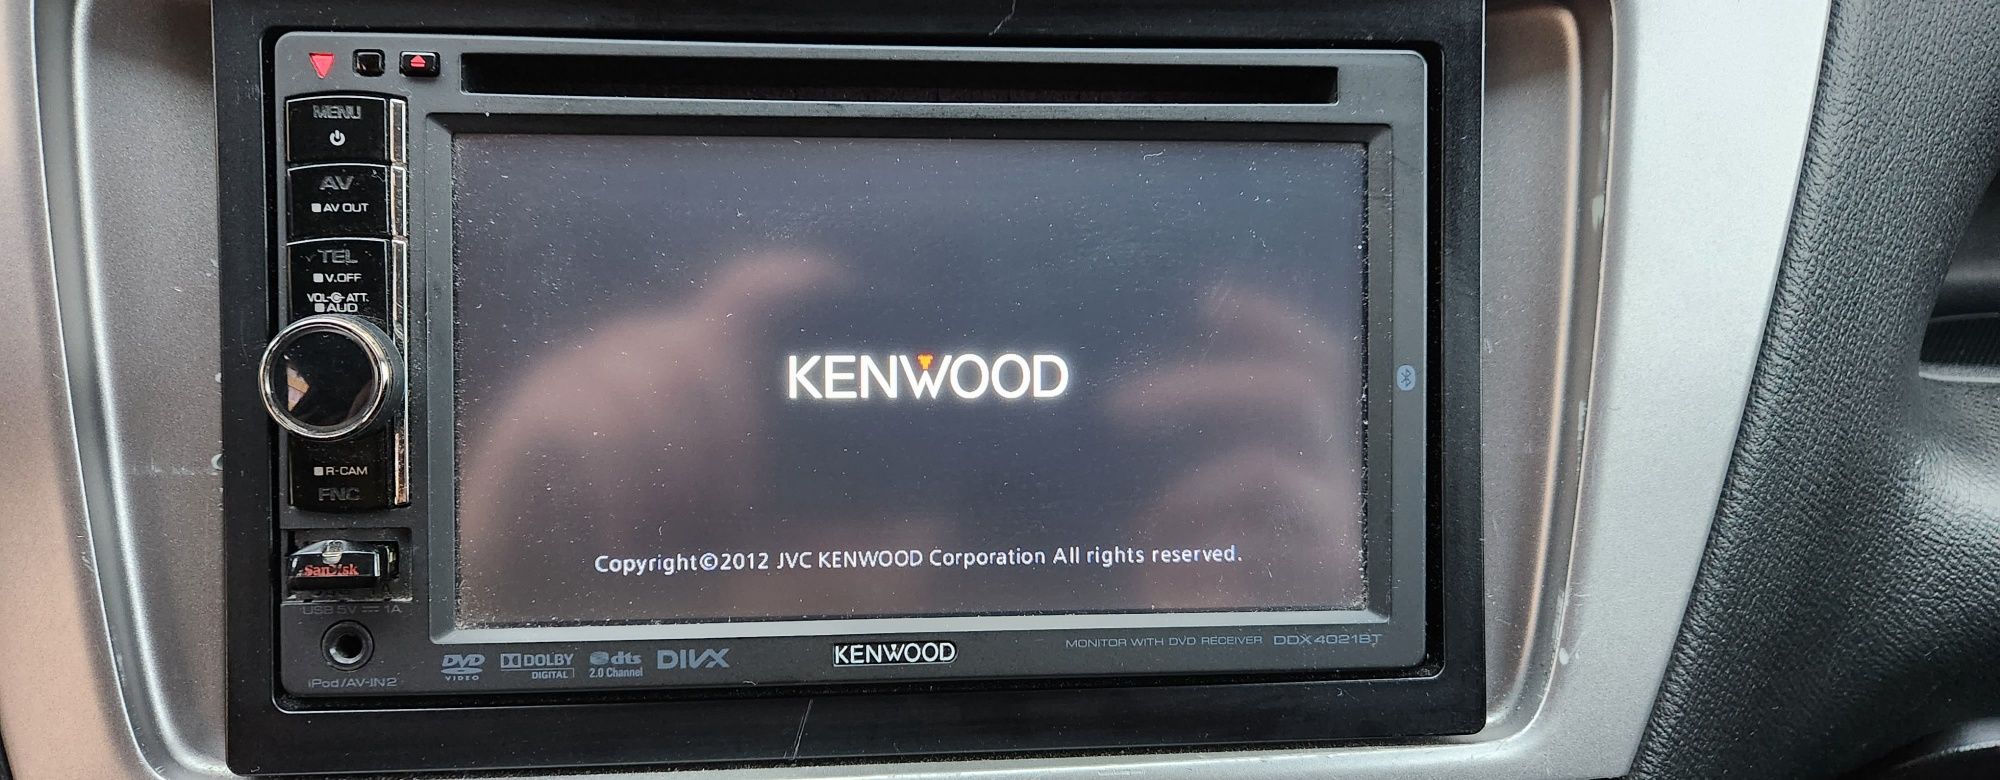 Navigatie/player auto Kenwood, dvd, usb bluetooth